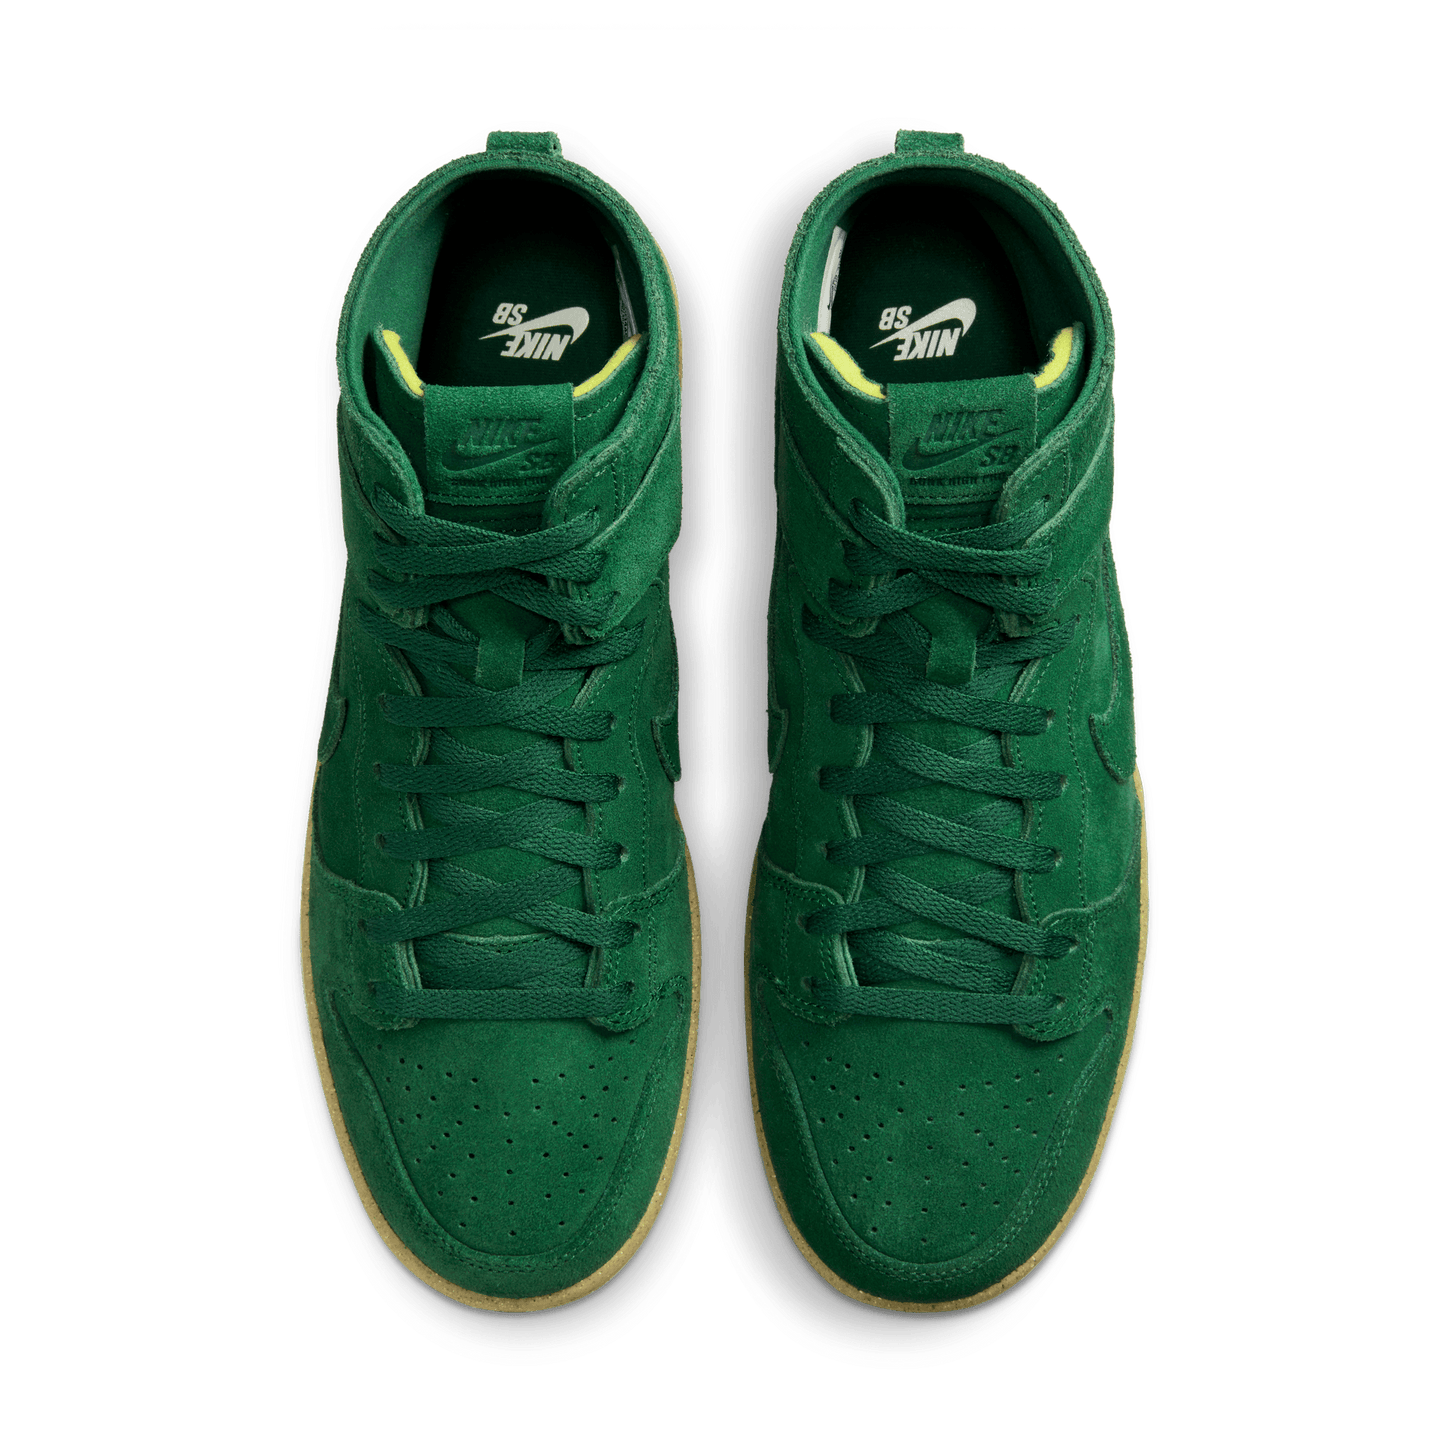 Nike SB Dunk High Pro gorge green gorge green black